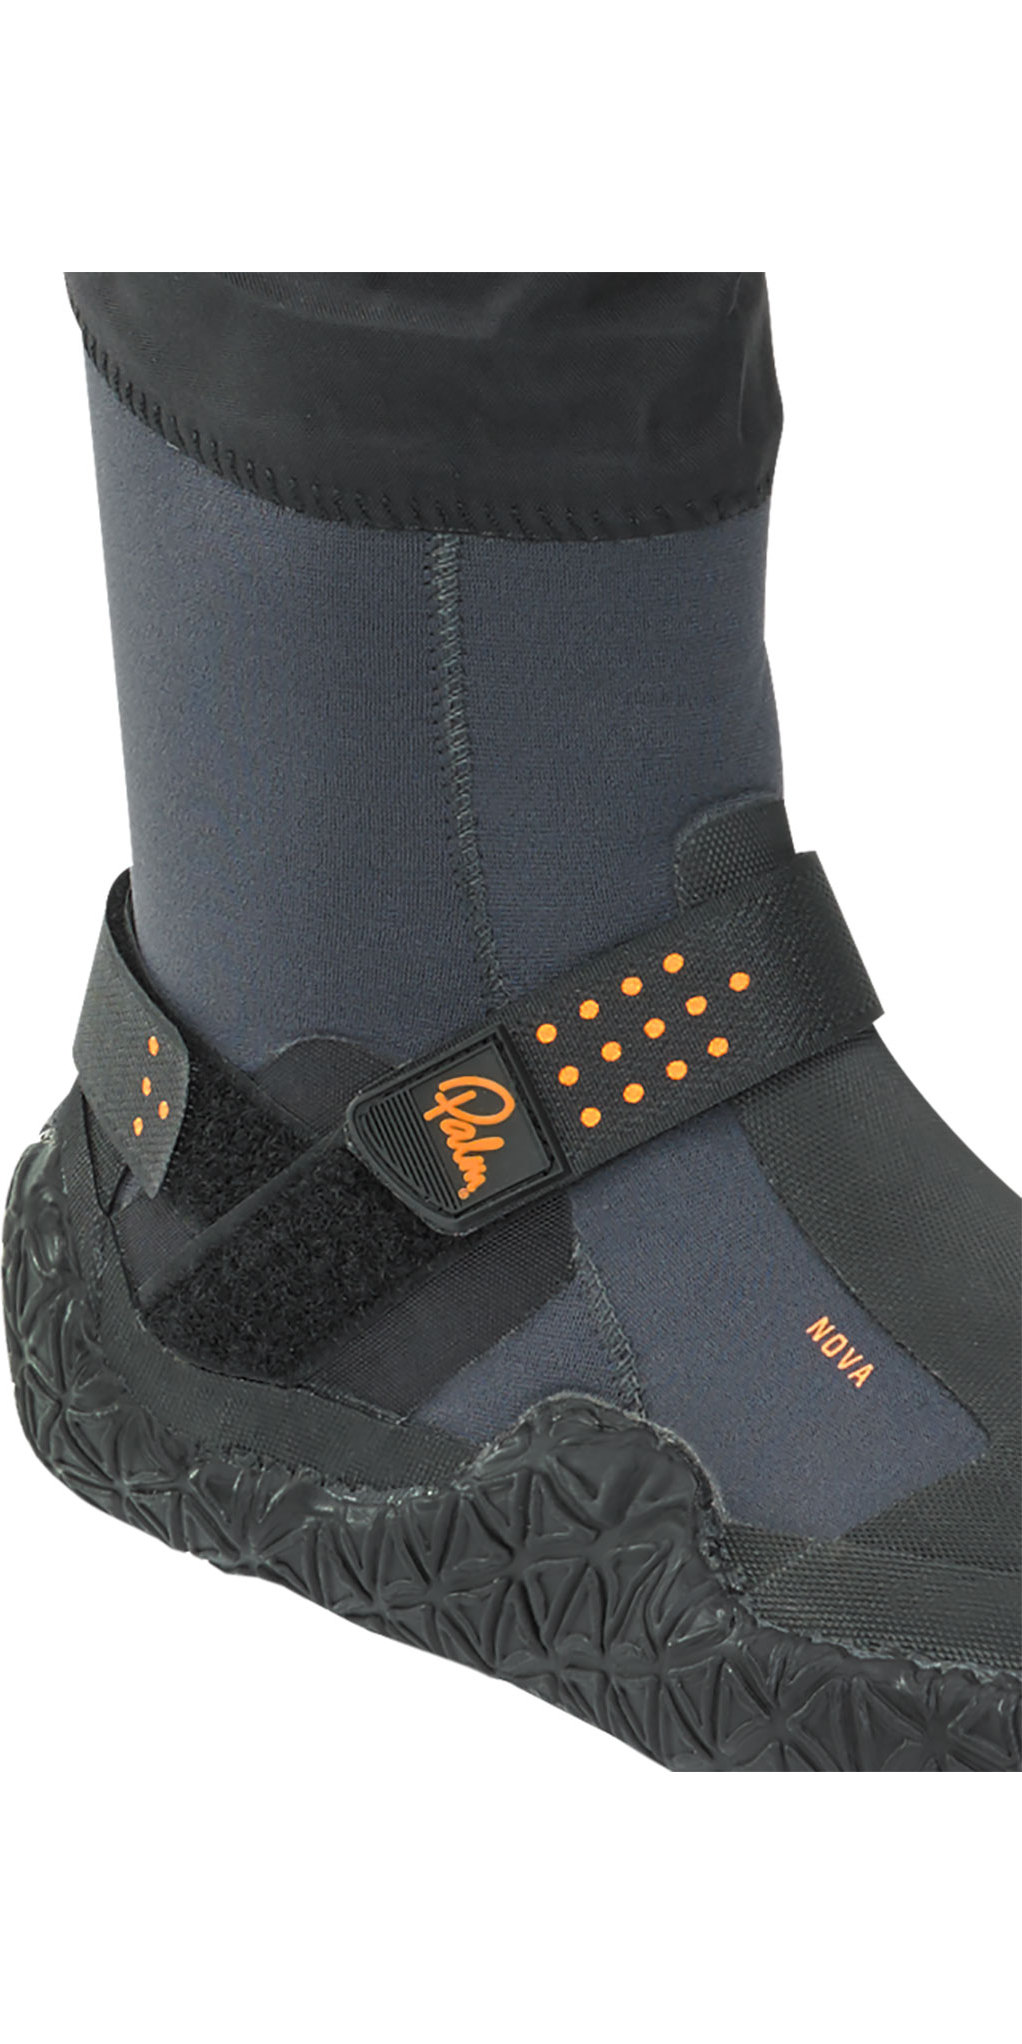 2020 Palm Nova Kayak Boots 12339 - Jet Grey - Accessories - Footwear ...